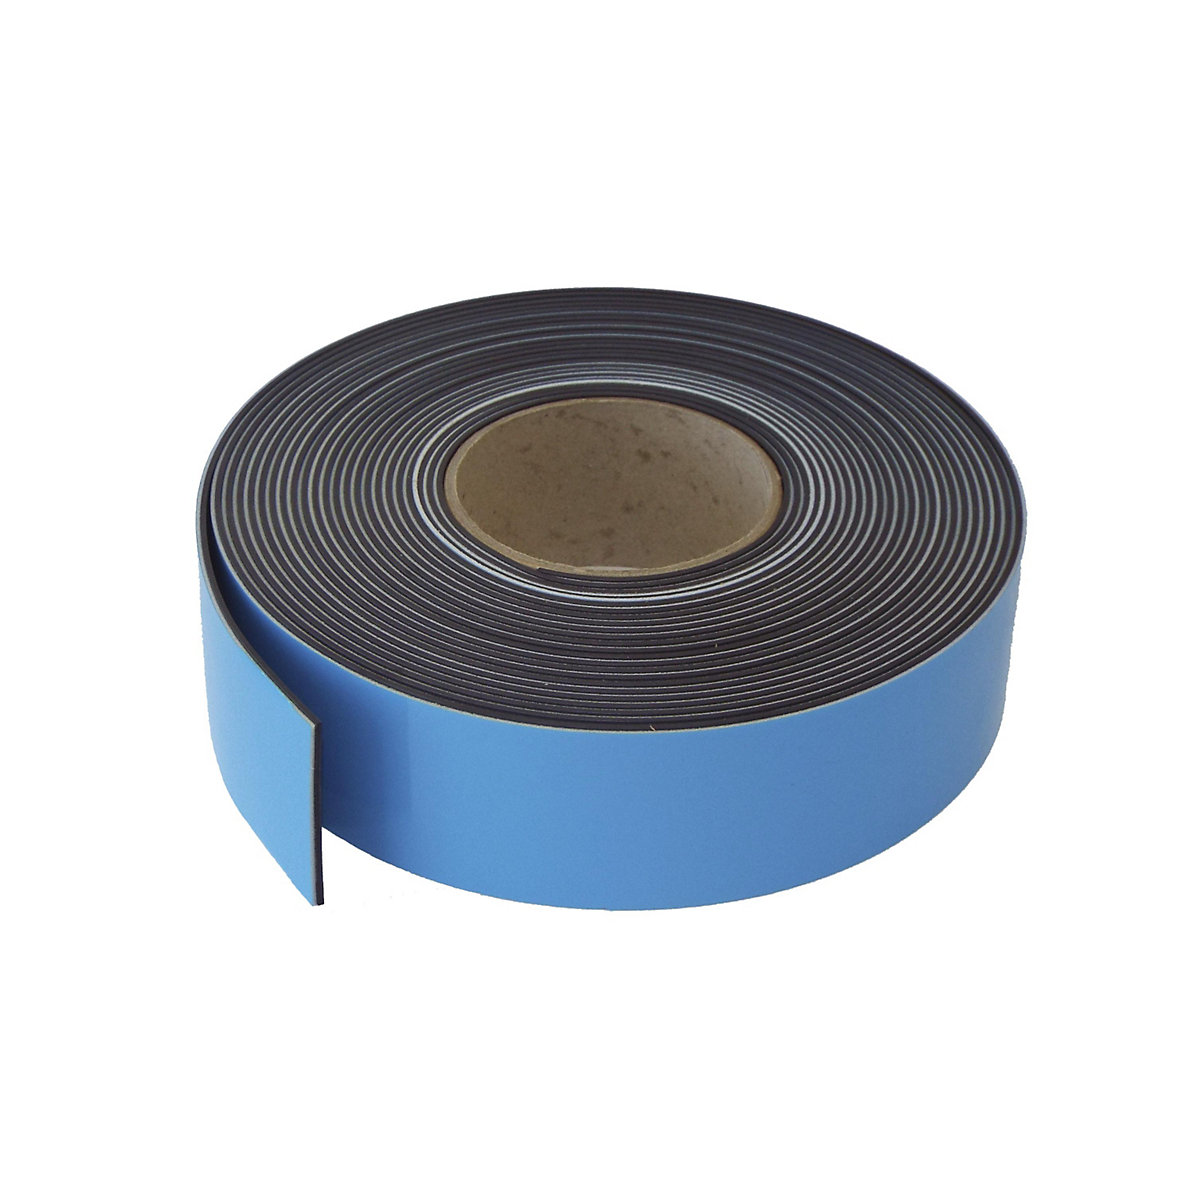 Adhesive Backing Tira magnética de goma Suave autoadhesiva, Cinta magnética  de 1 a 10 metros, 6x1, 10x1,5, 12x2, 15x2, 20x1,5mm, ancho de 10mm, 15mm y